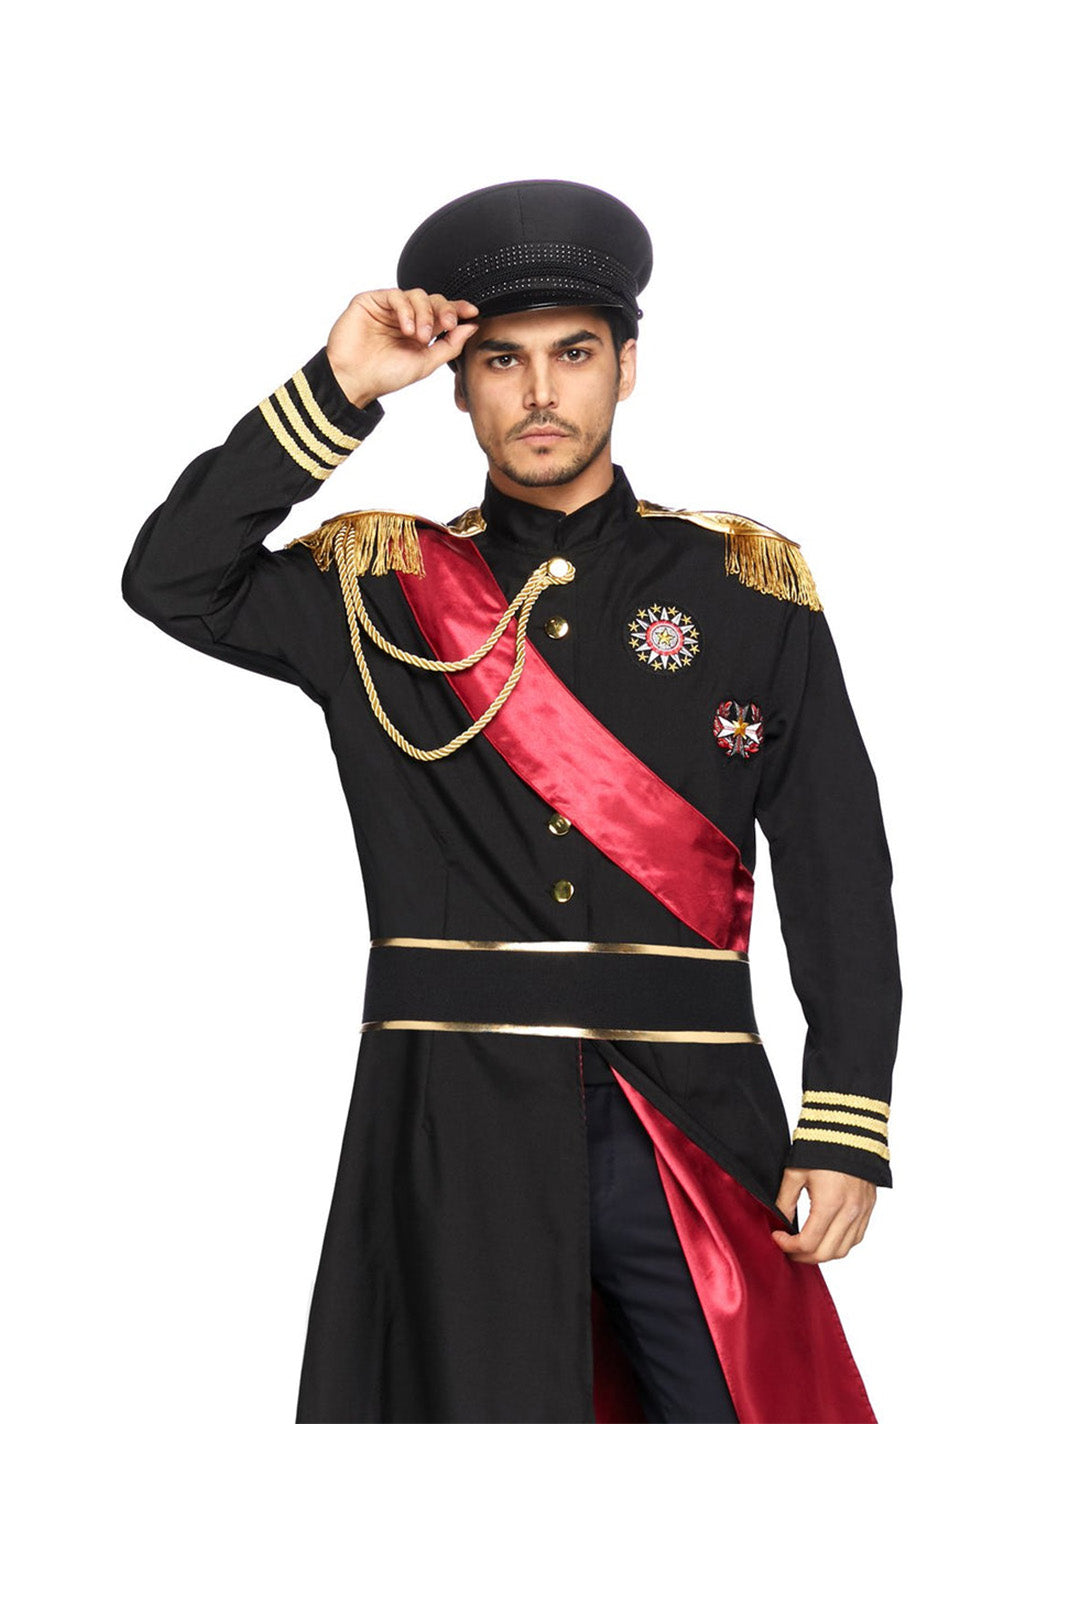 Men's General Military Costume Perth | Hurly Burly – Hurly-Burly